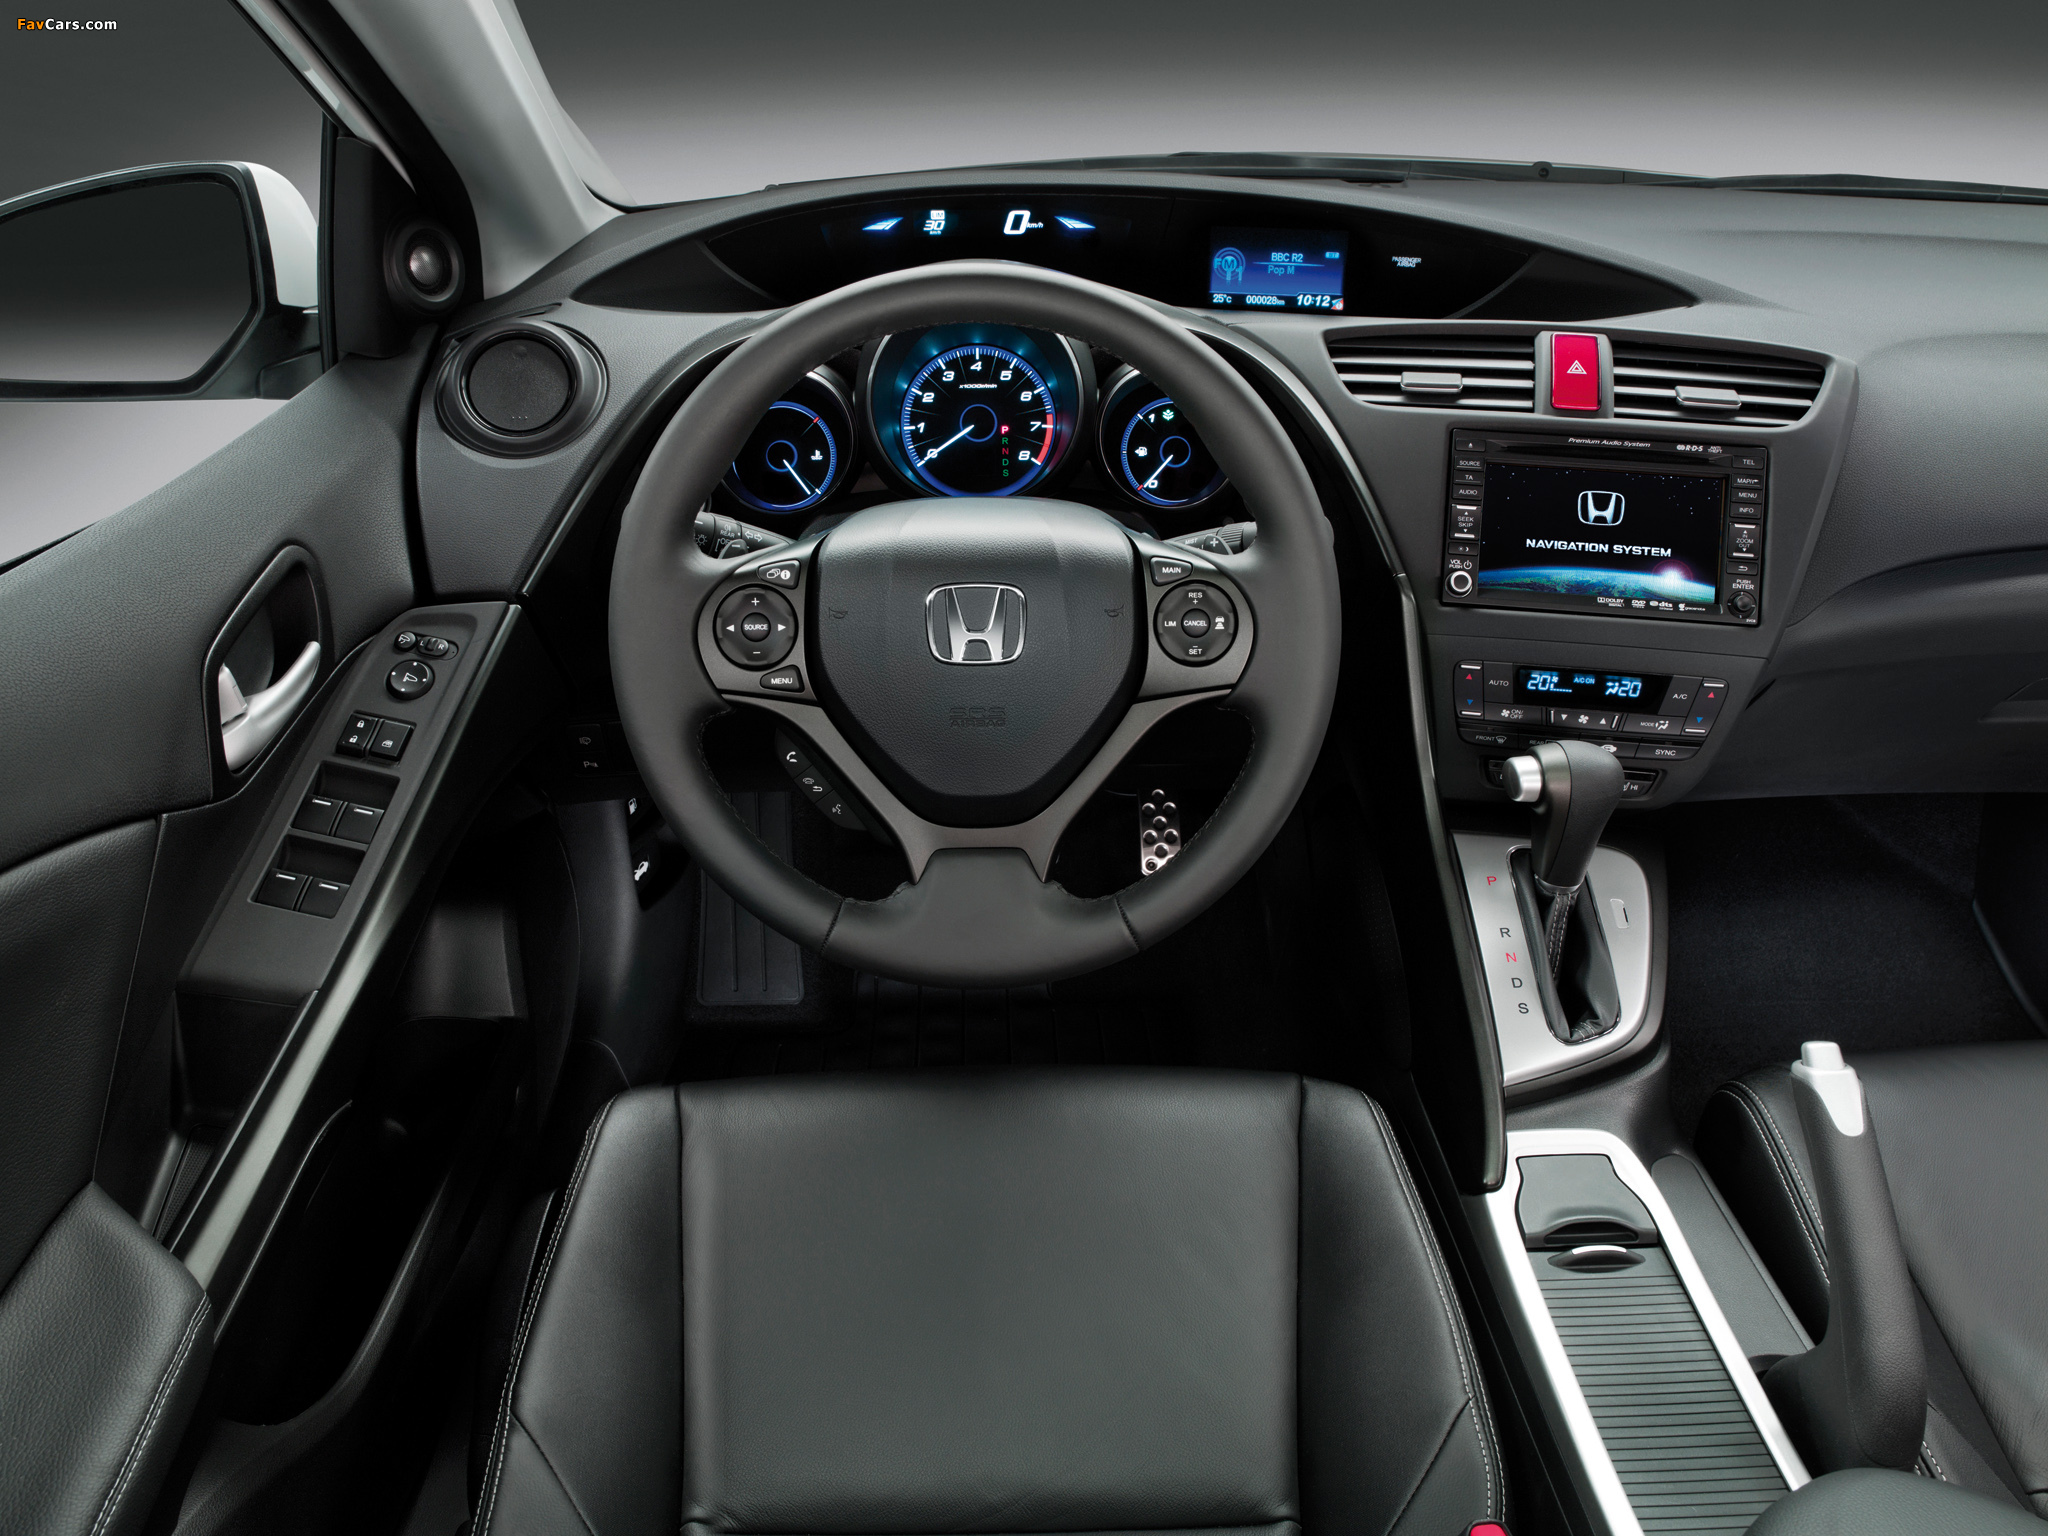 Honda Civic Hatchback 2011 images (2048 x 1536)